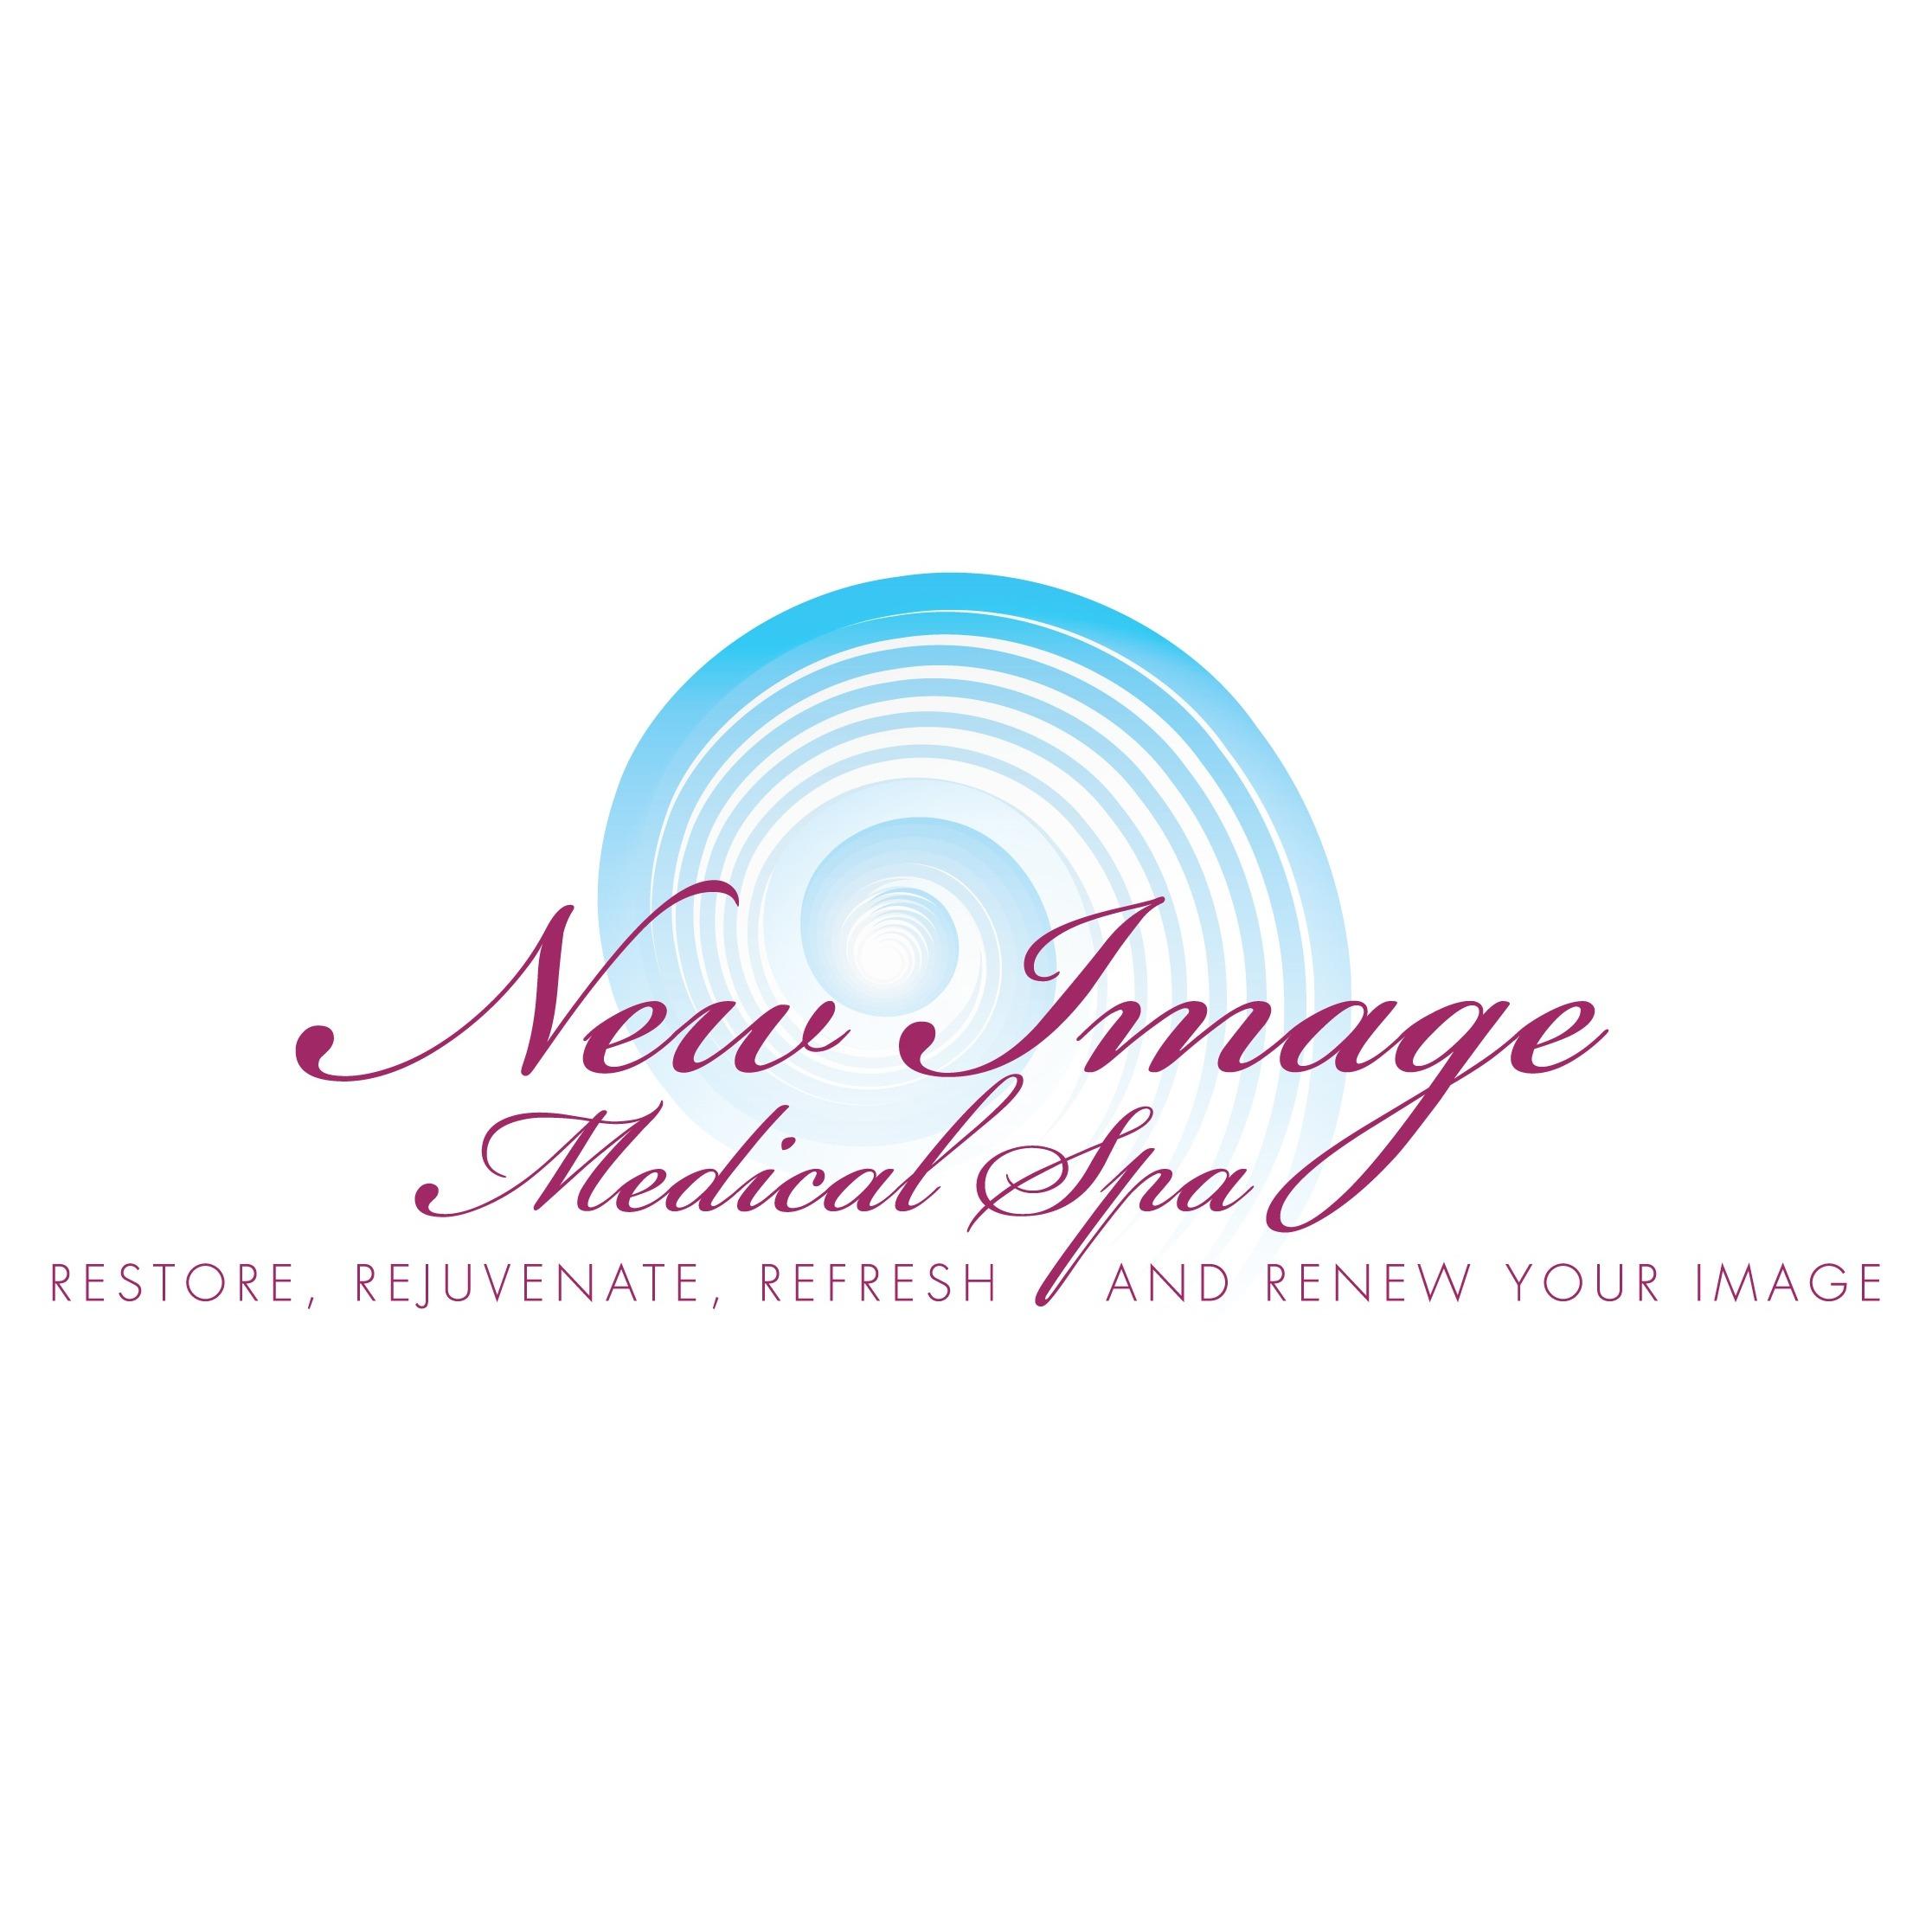 New Image Medical Spa Logo